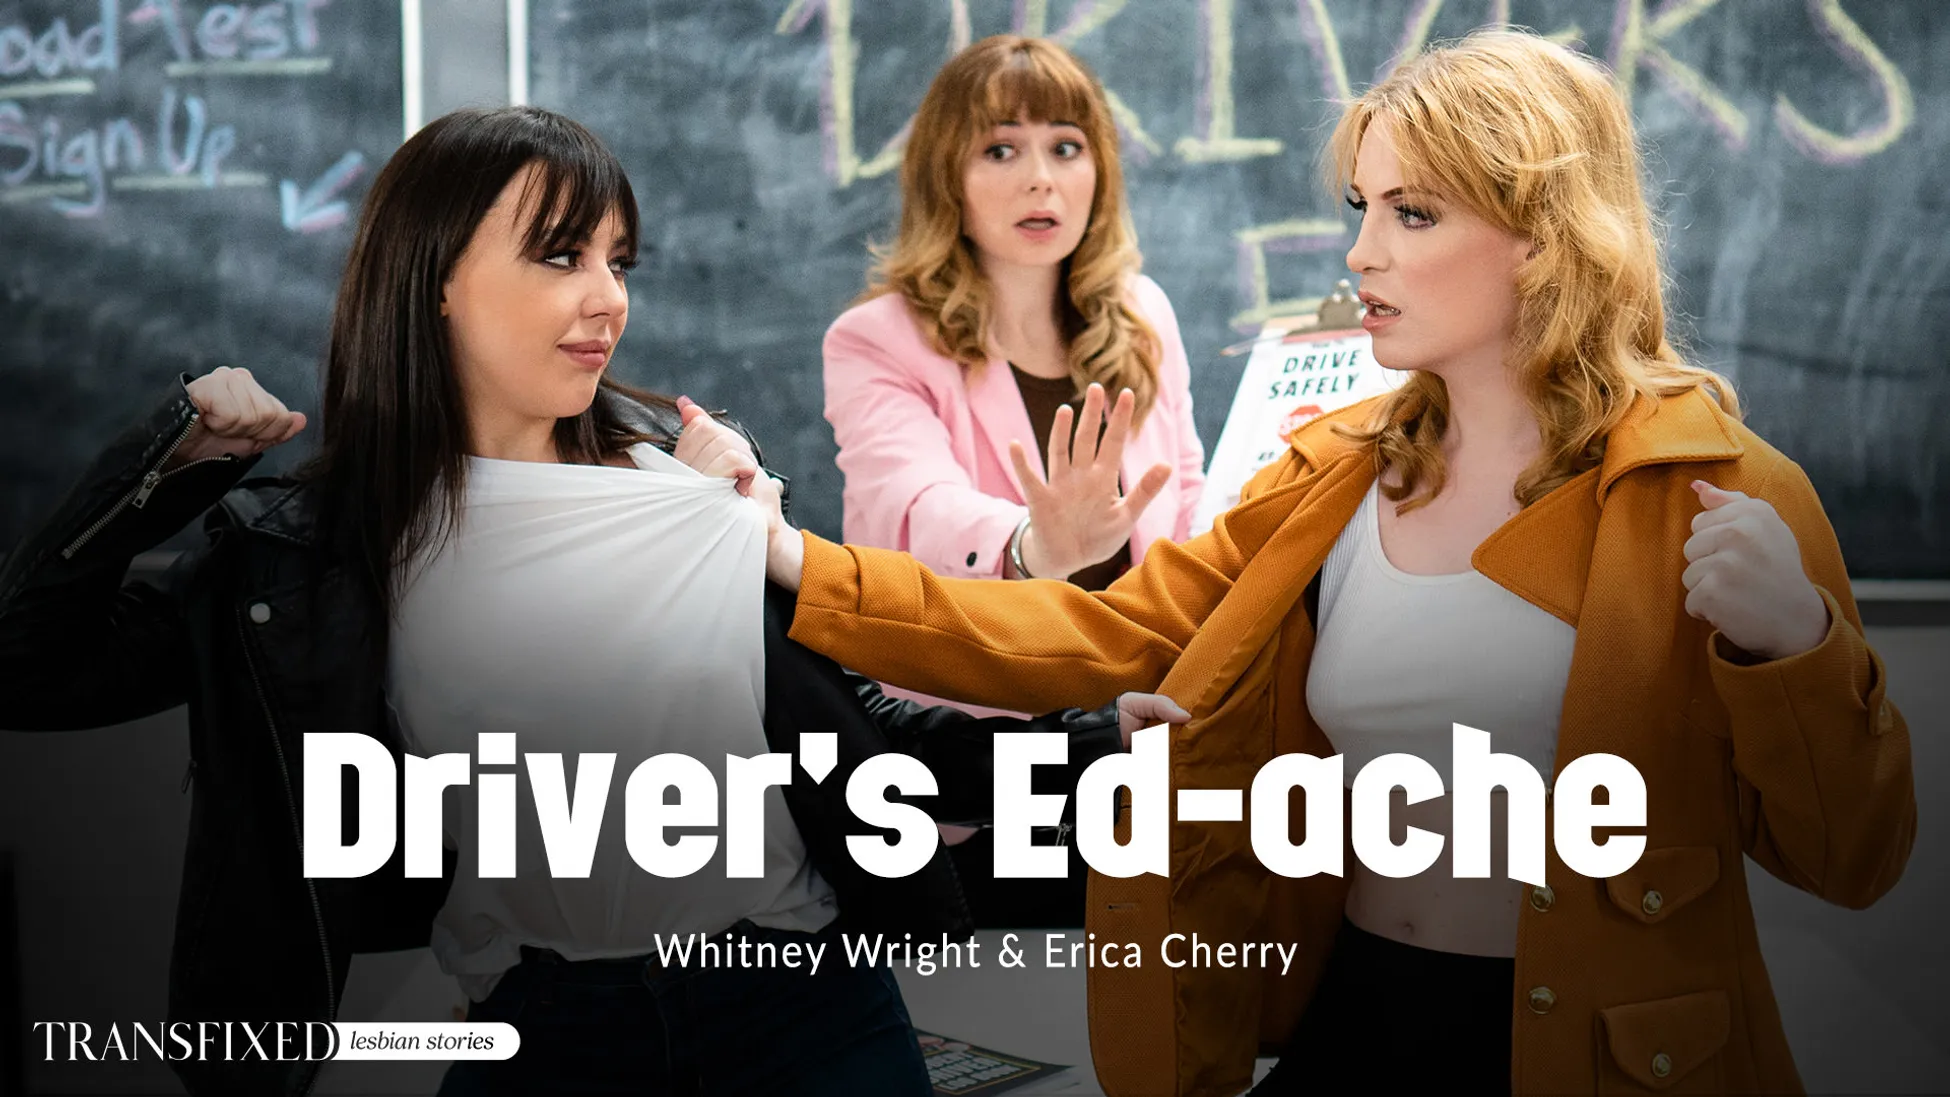 Transfixed Whitney Wright & Erica Cherry Driver's Ed-ache